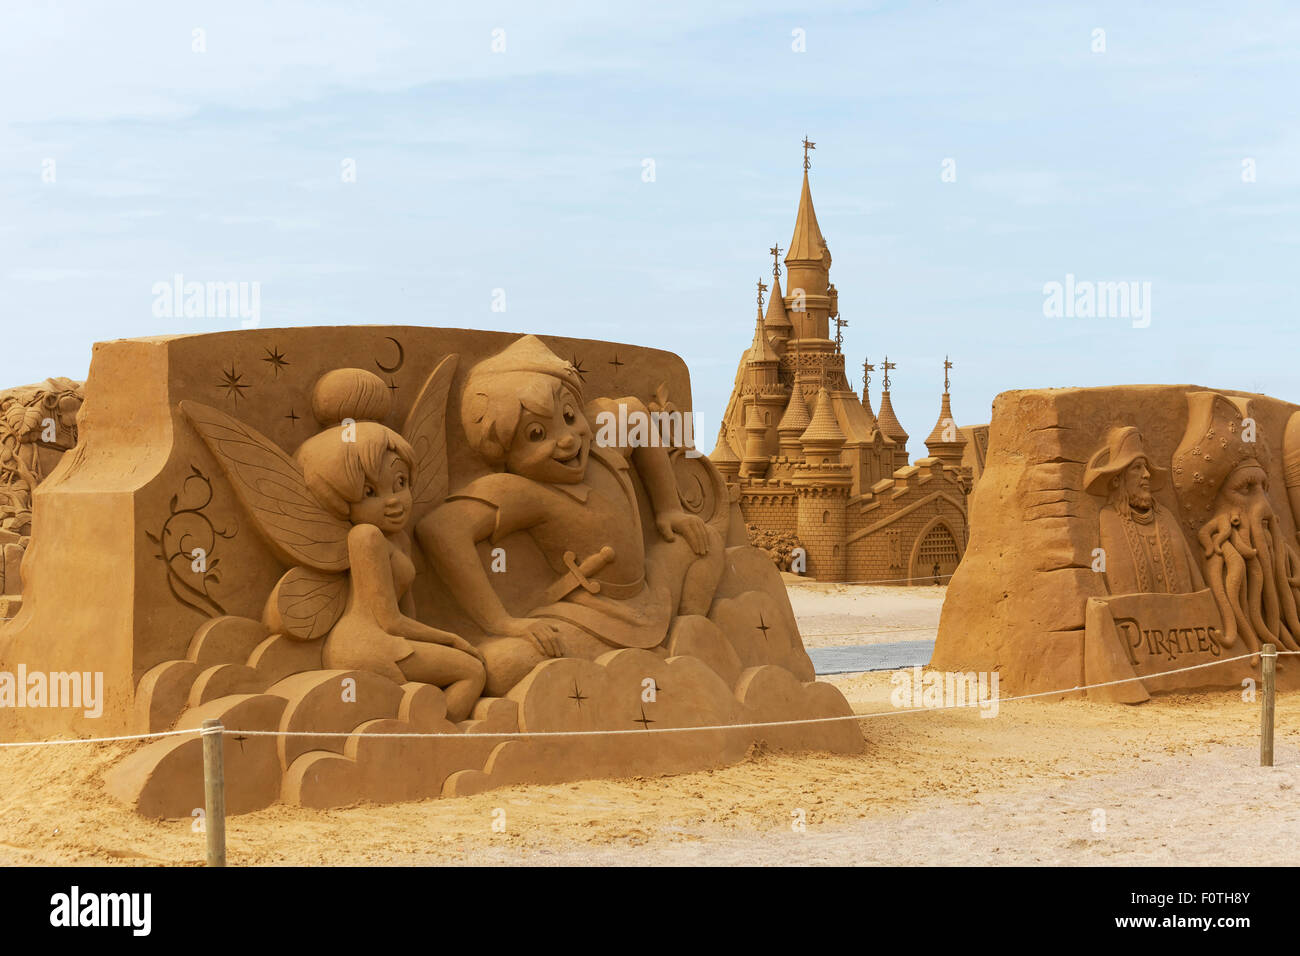 Peter Pan and elves, Walt Disney cartoons and fairytale castle made of sand, sand sculpture festival Frozen Summer Sun, Oostende Stock Photo